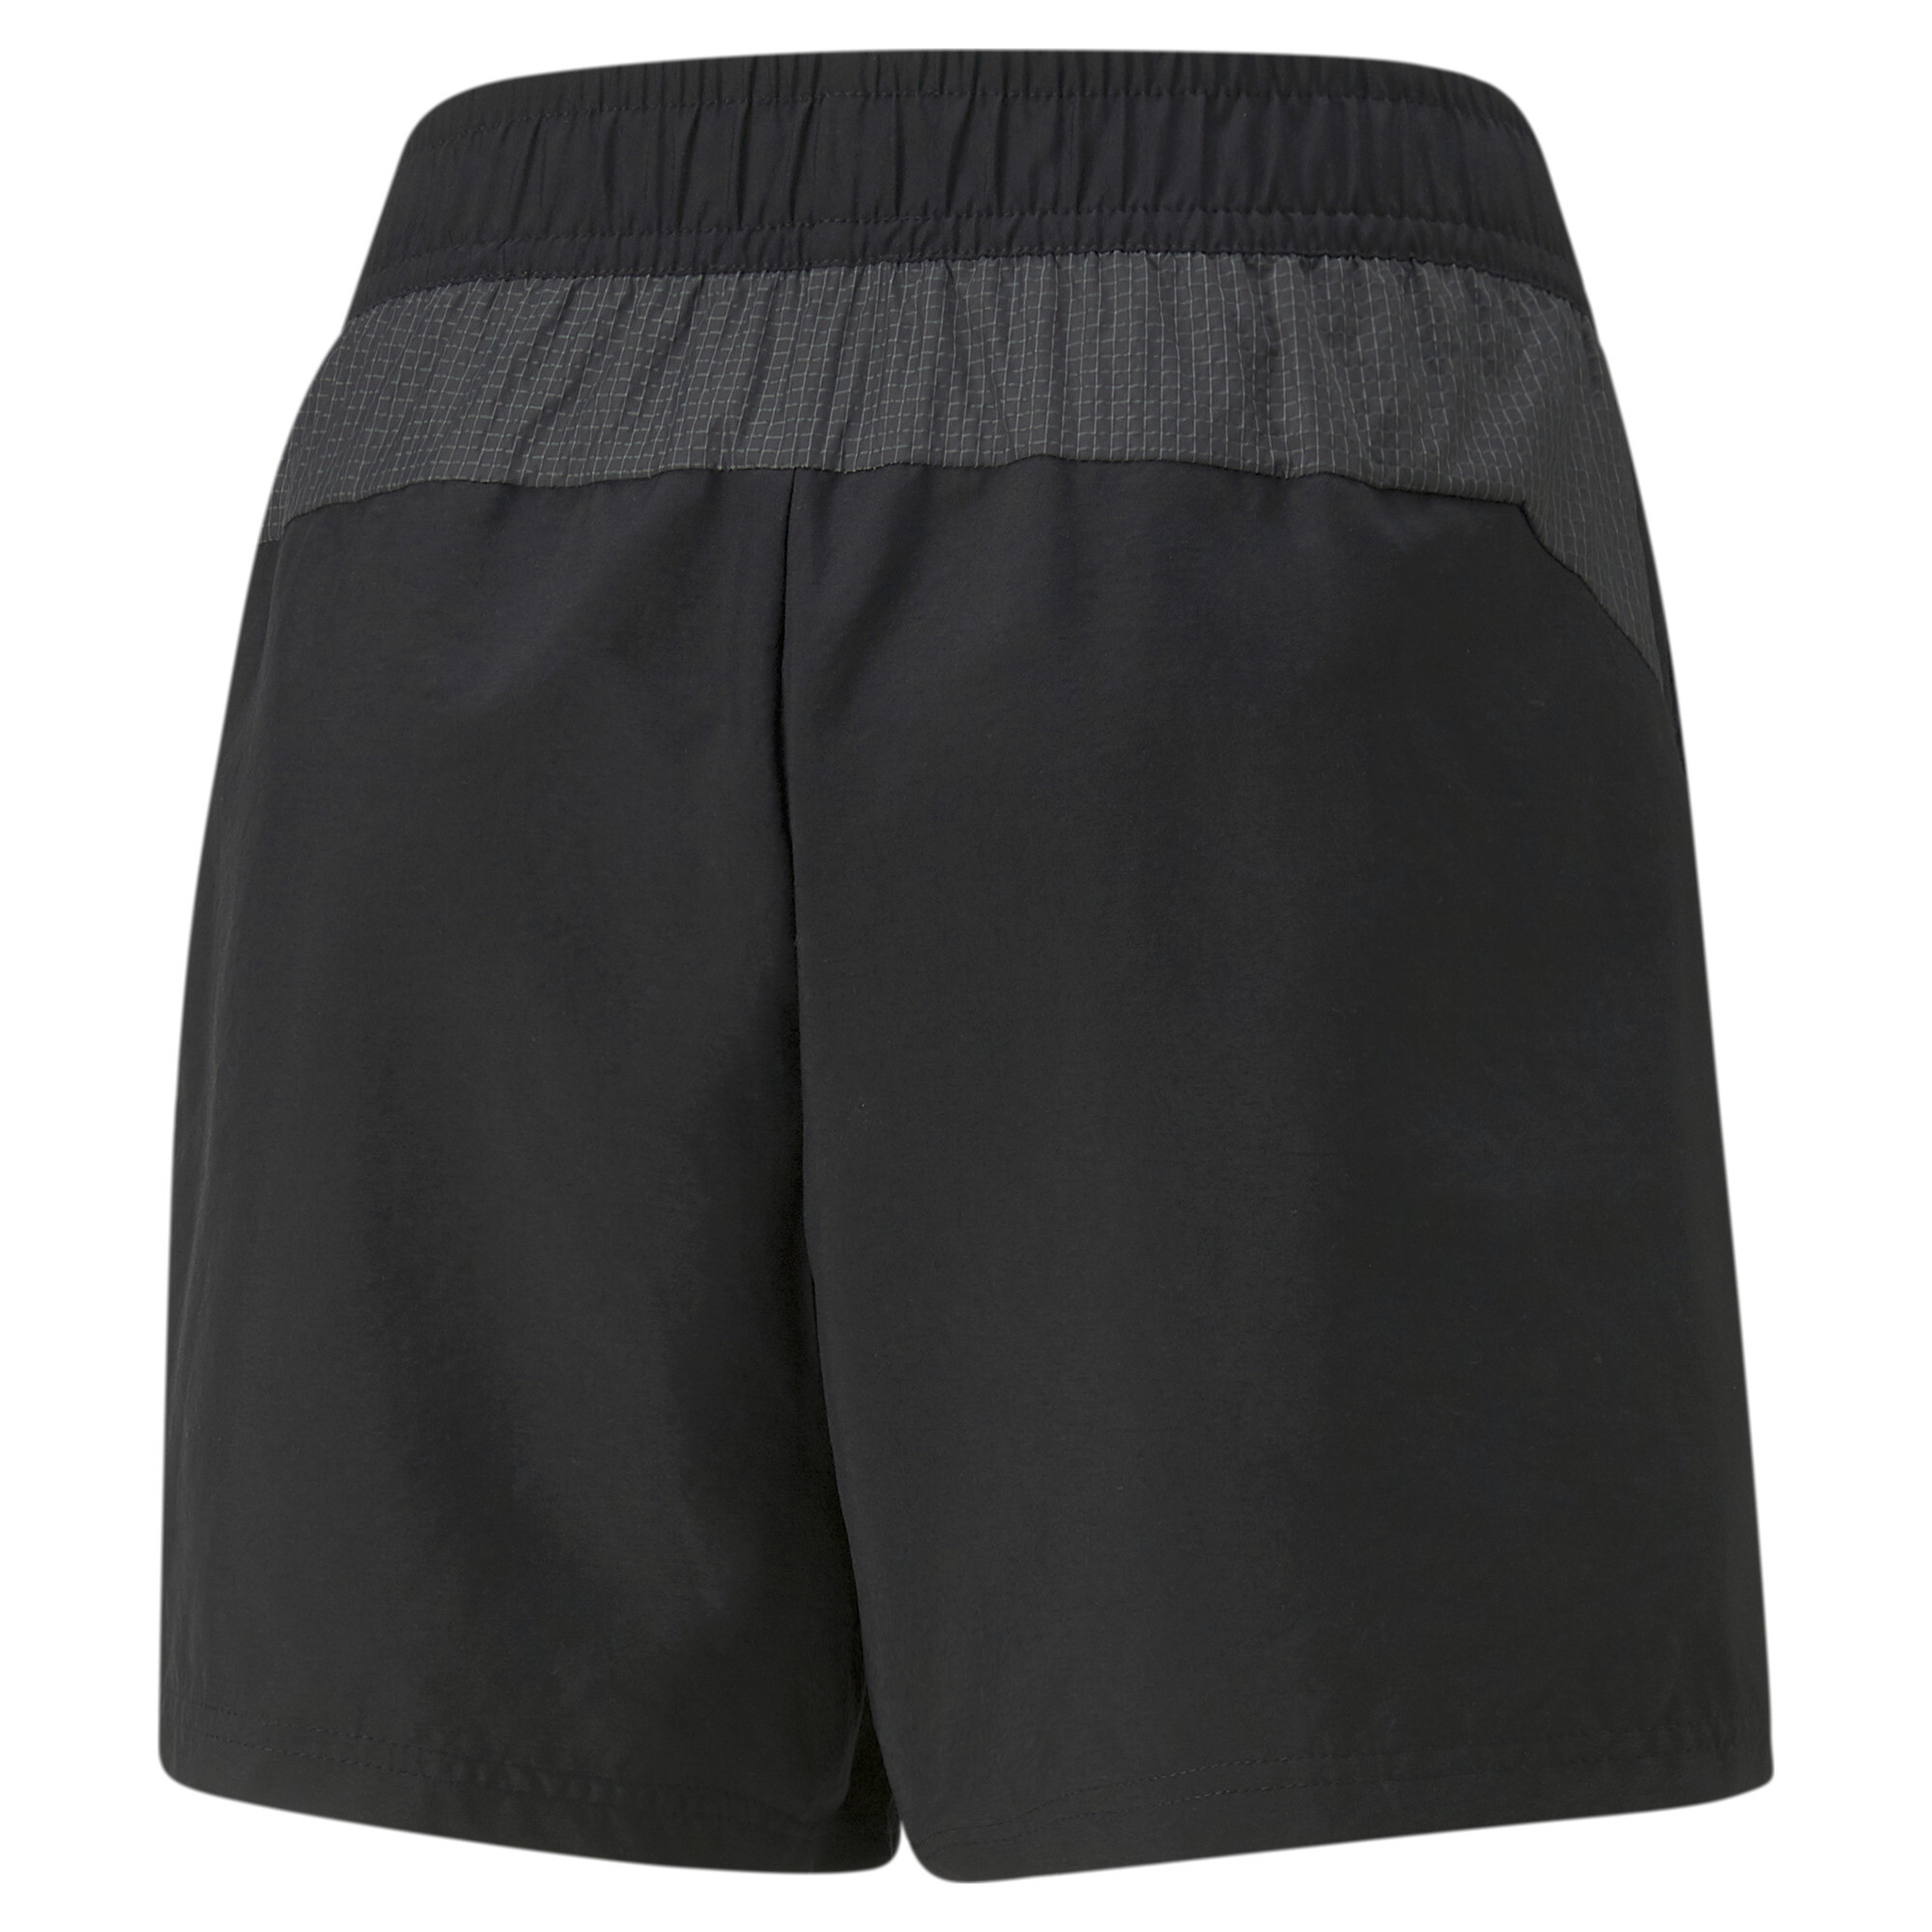 Women's PUMA SWxP Woven Shorts Women In Black, Size Small